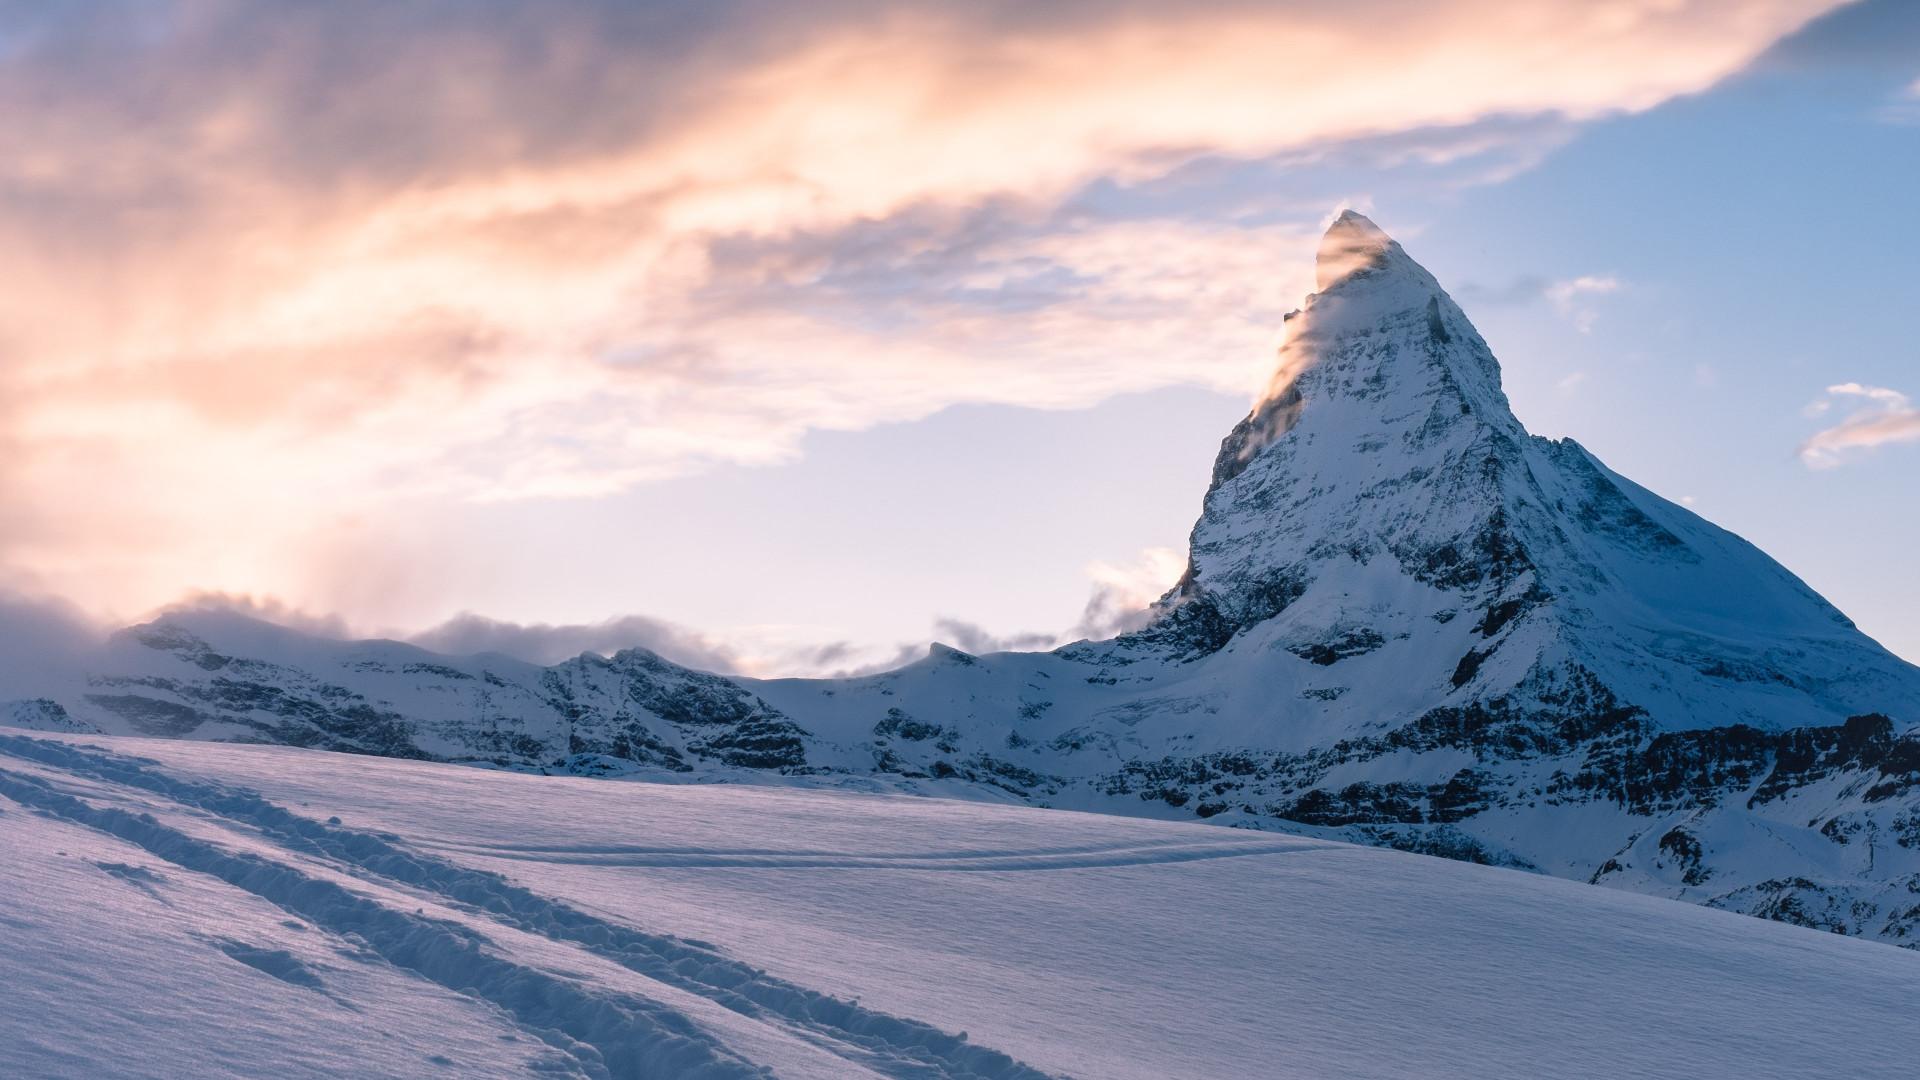 Download wallpaper: Swiss Alps. Matterhorn mountain peak 1920x1080